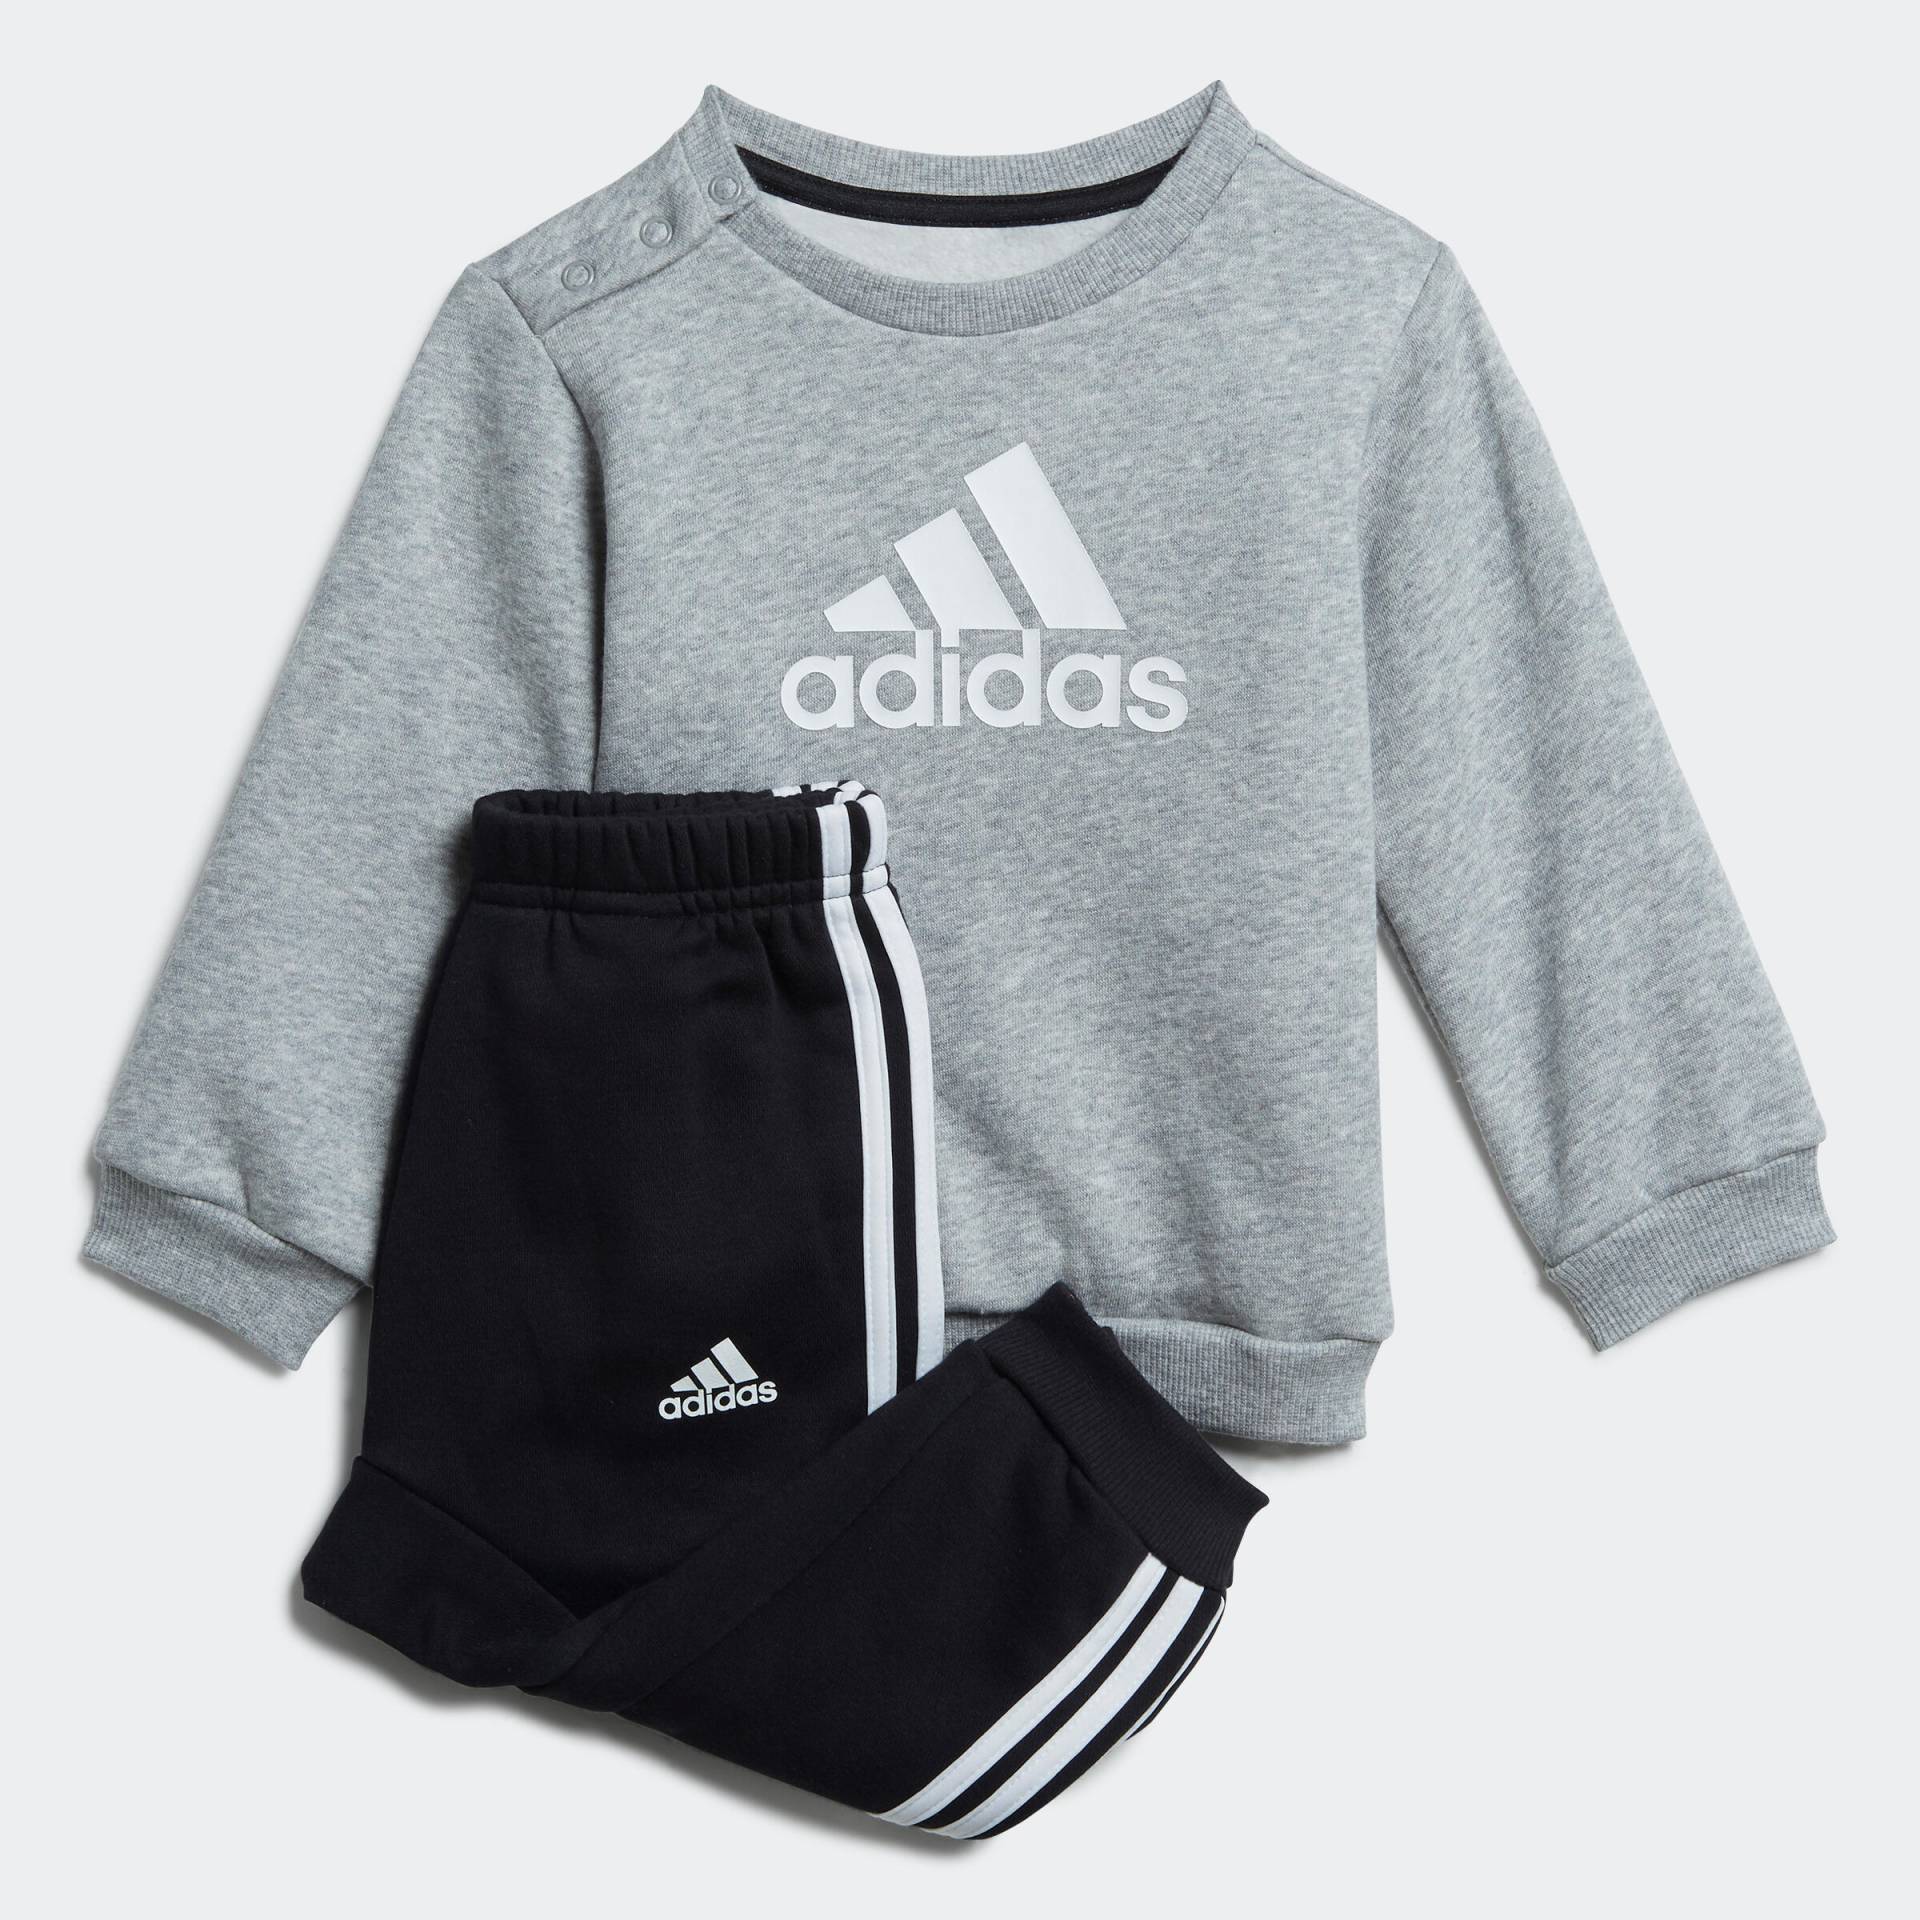 Adidas Trainingsanzug Baby - 3S grau/schwarz von Adidas